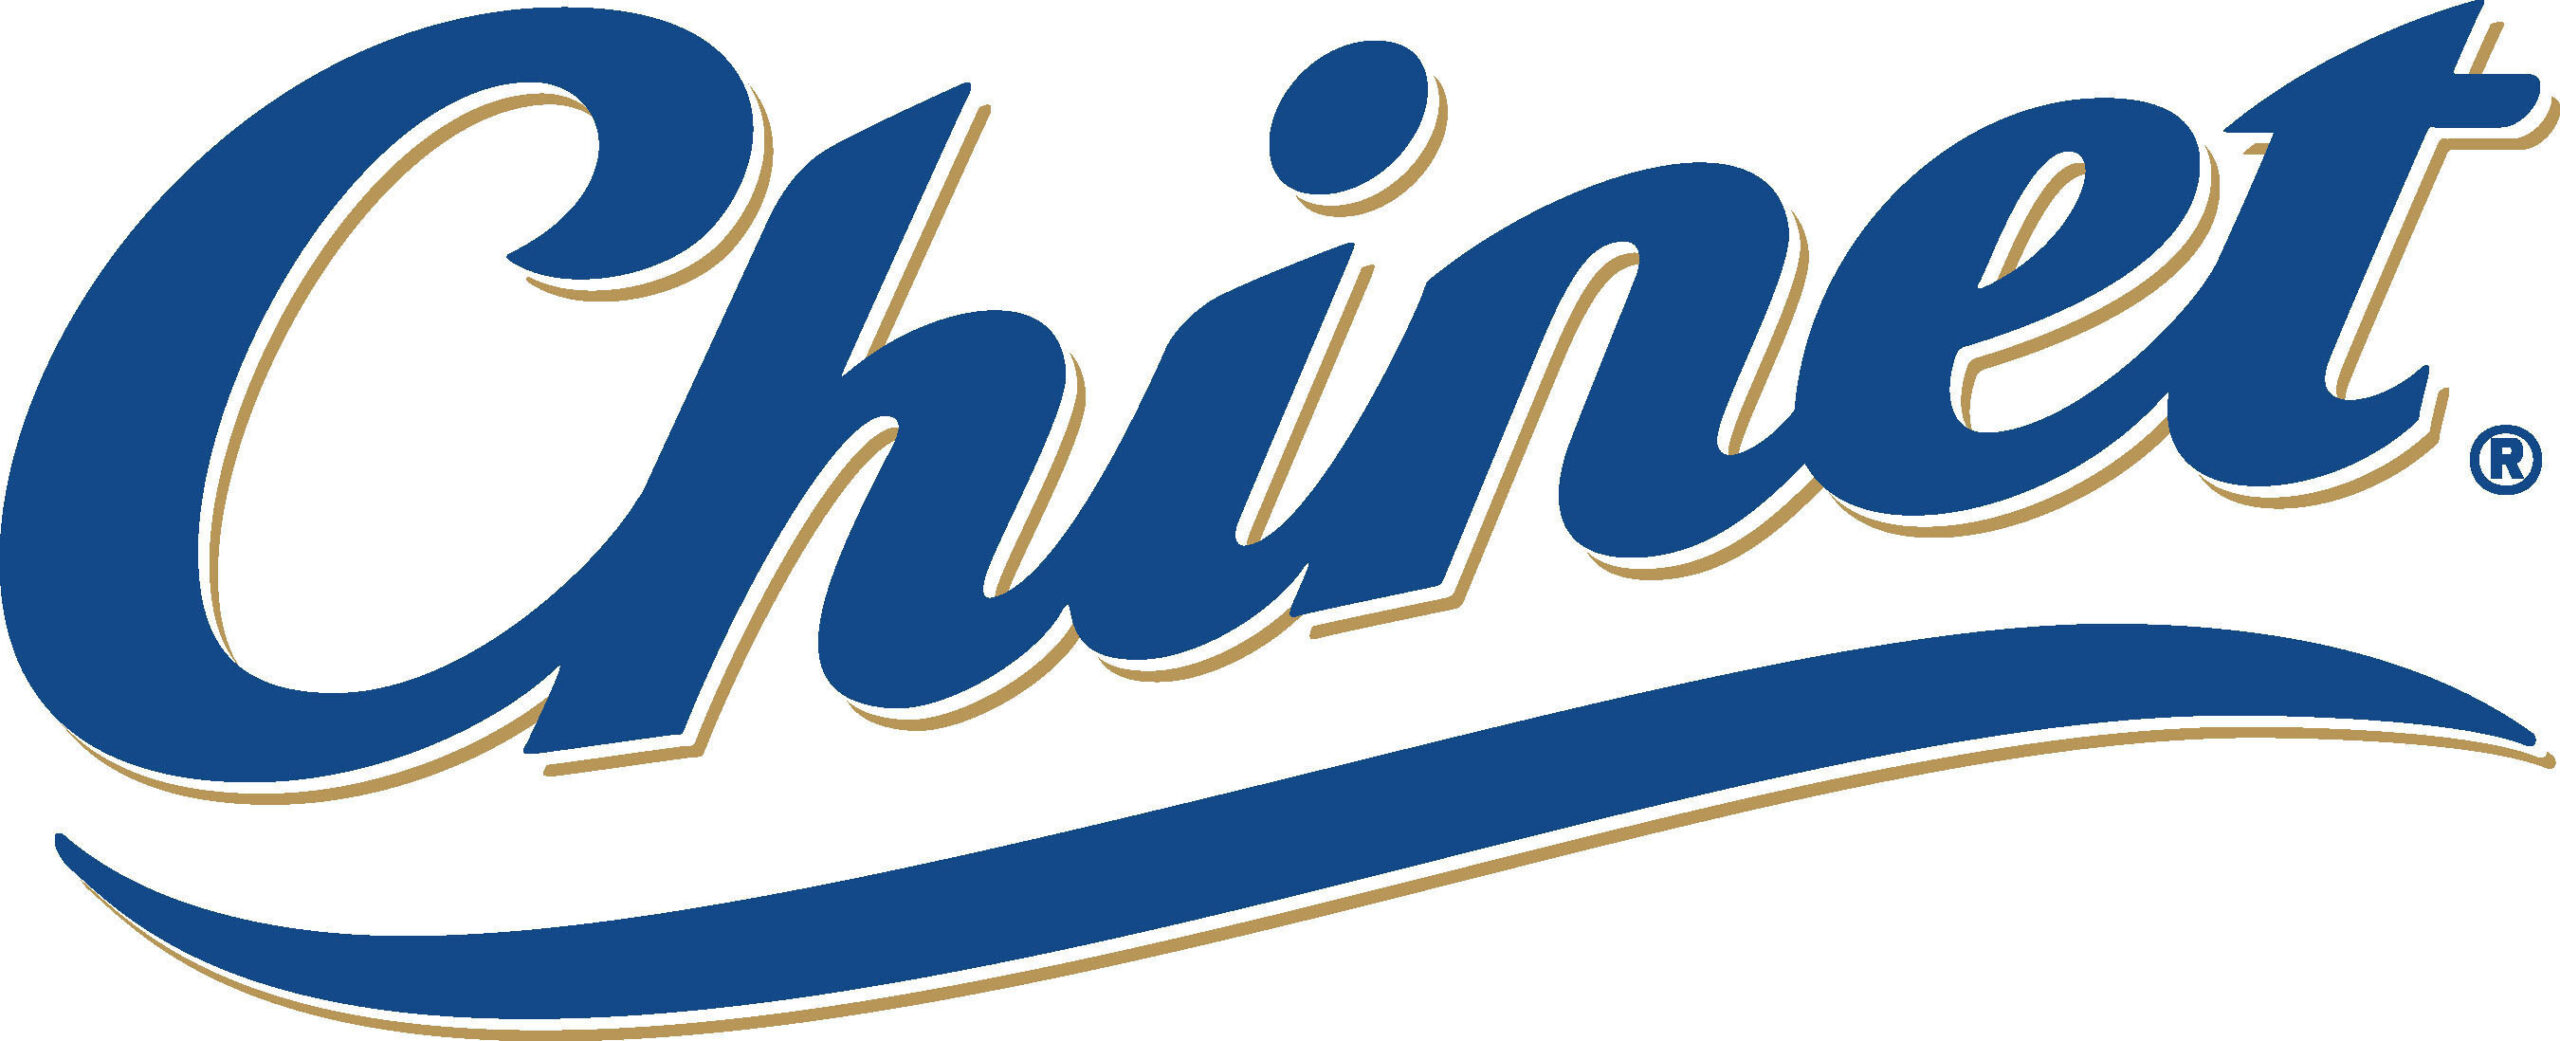 CHINET Logo.  (PRNewsFoto/CHINET(R) Brand)